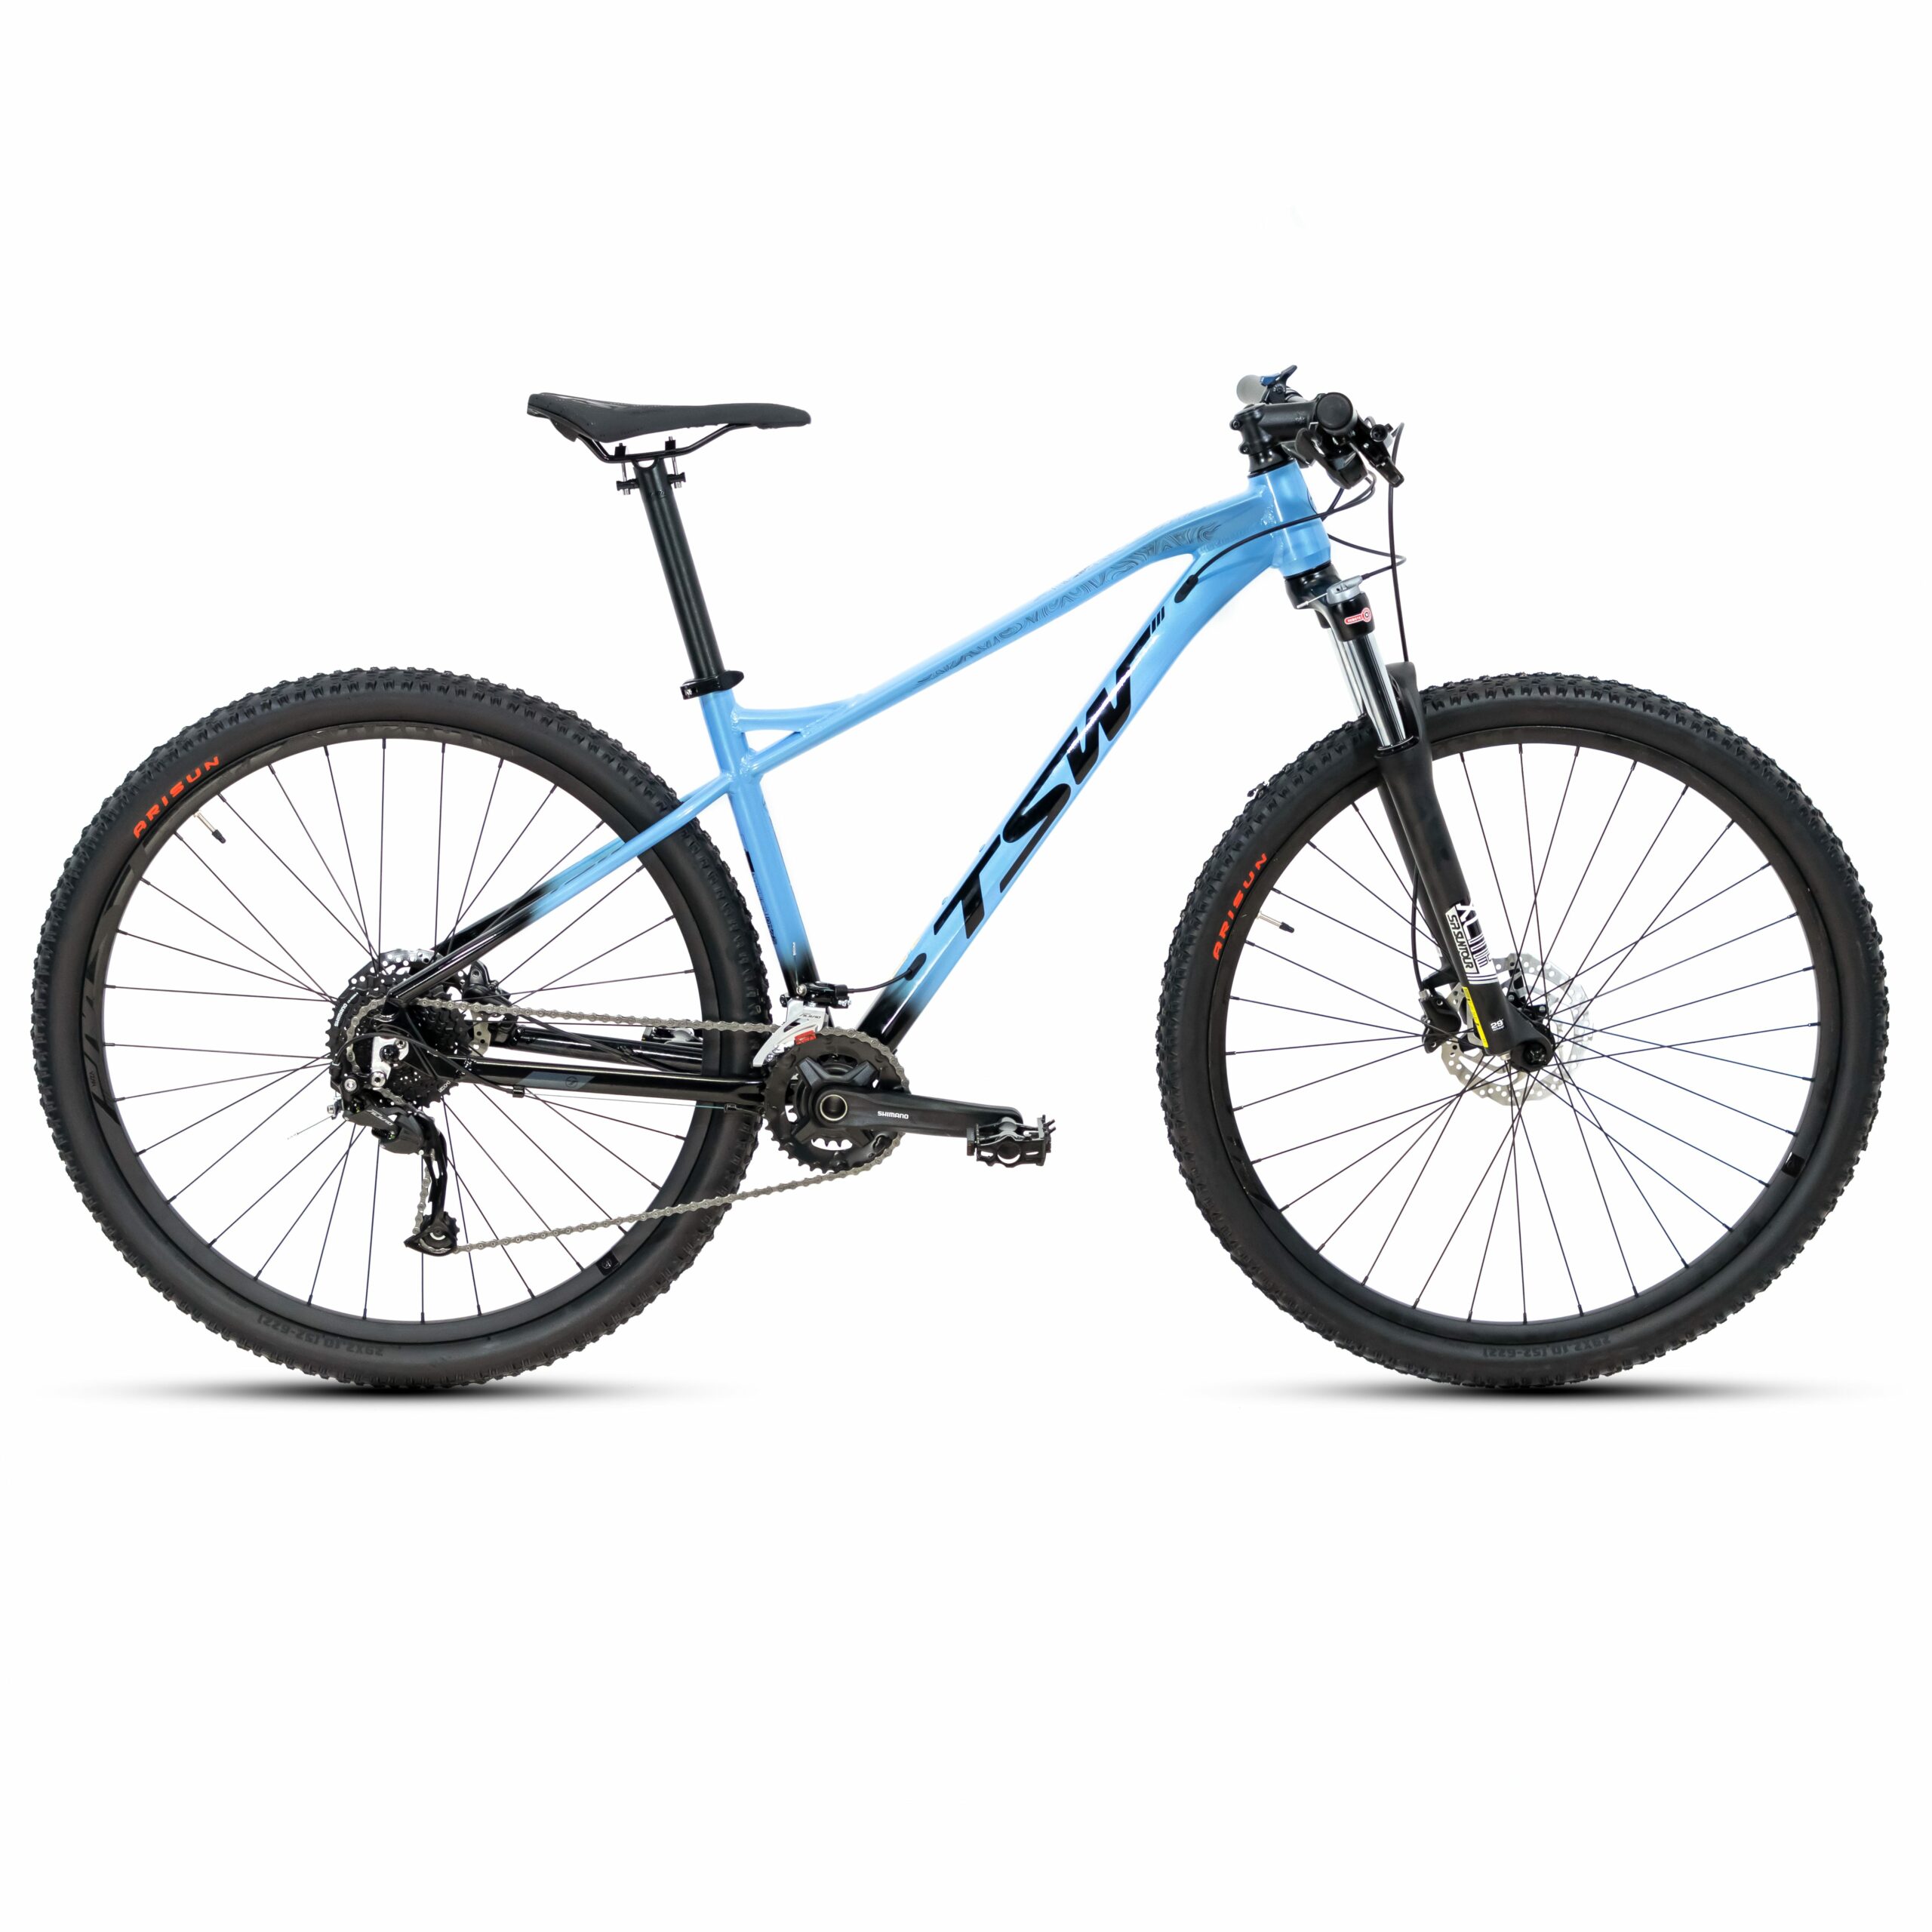 Bicicleta TSW Stamina | 2021/2022 - 21", Azul Claro/Preto